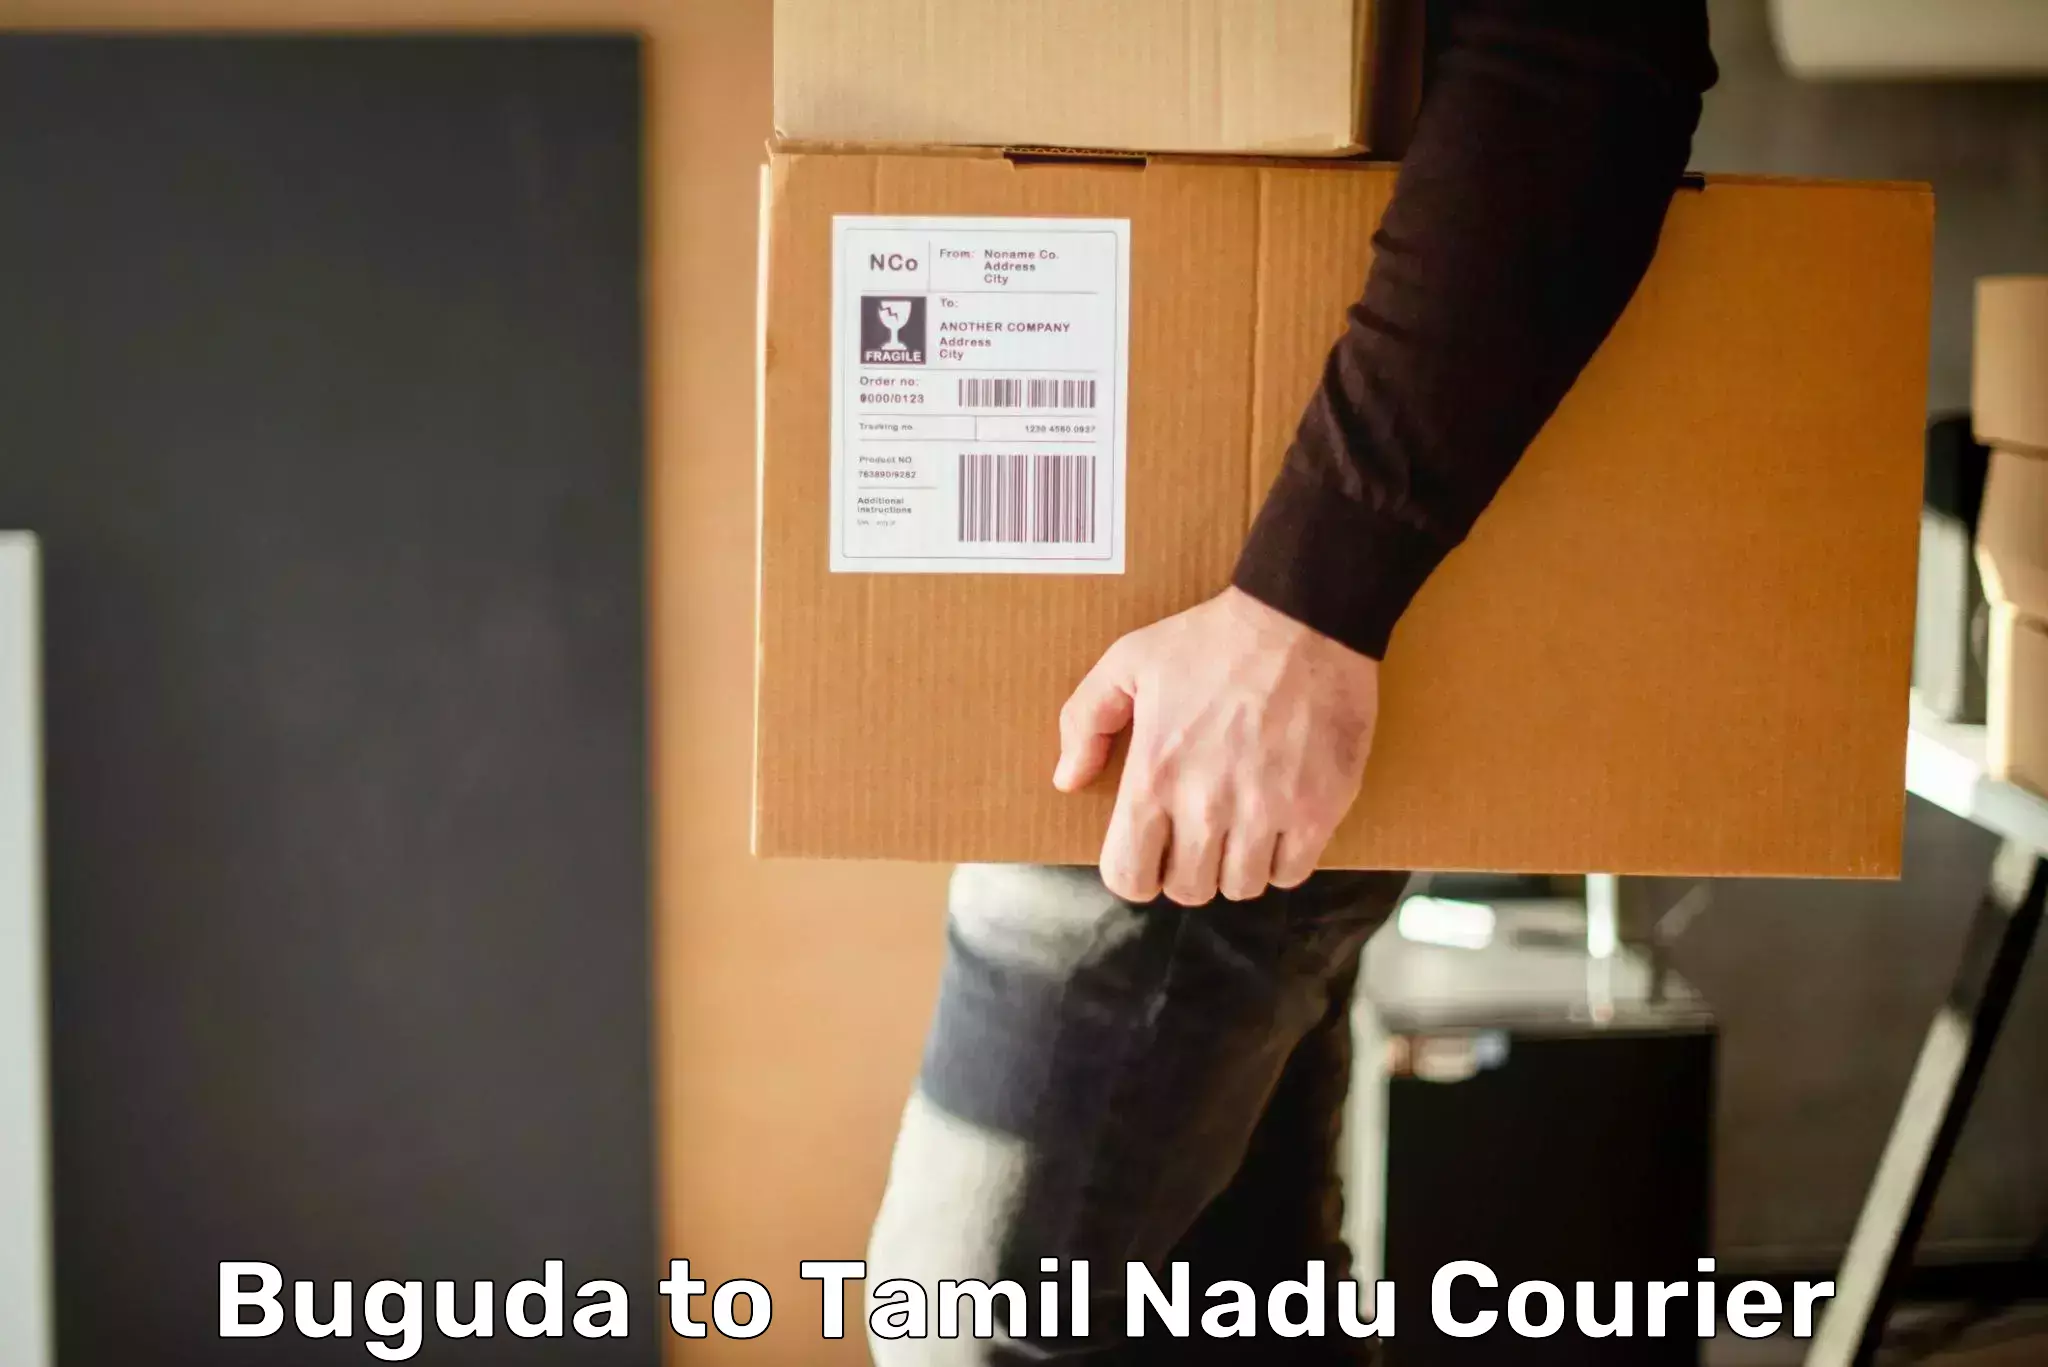 User-friendly delivery service Buguda to Tamil Nadu